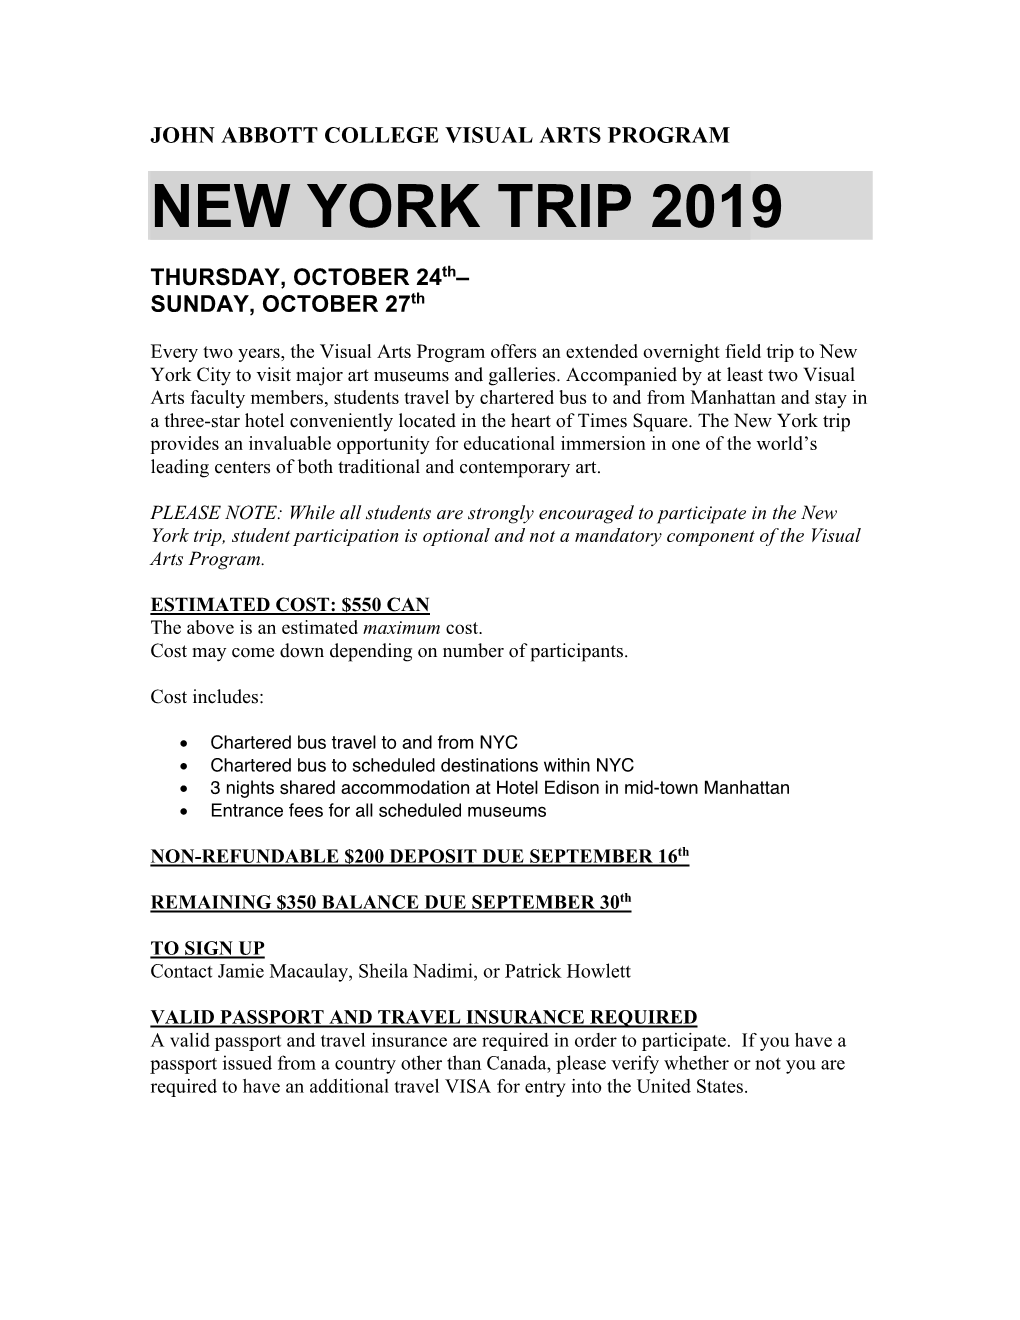 New York Trip 2019